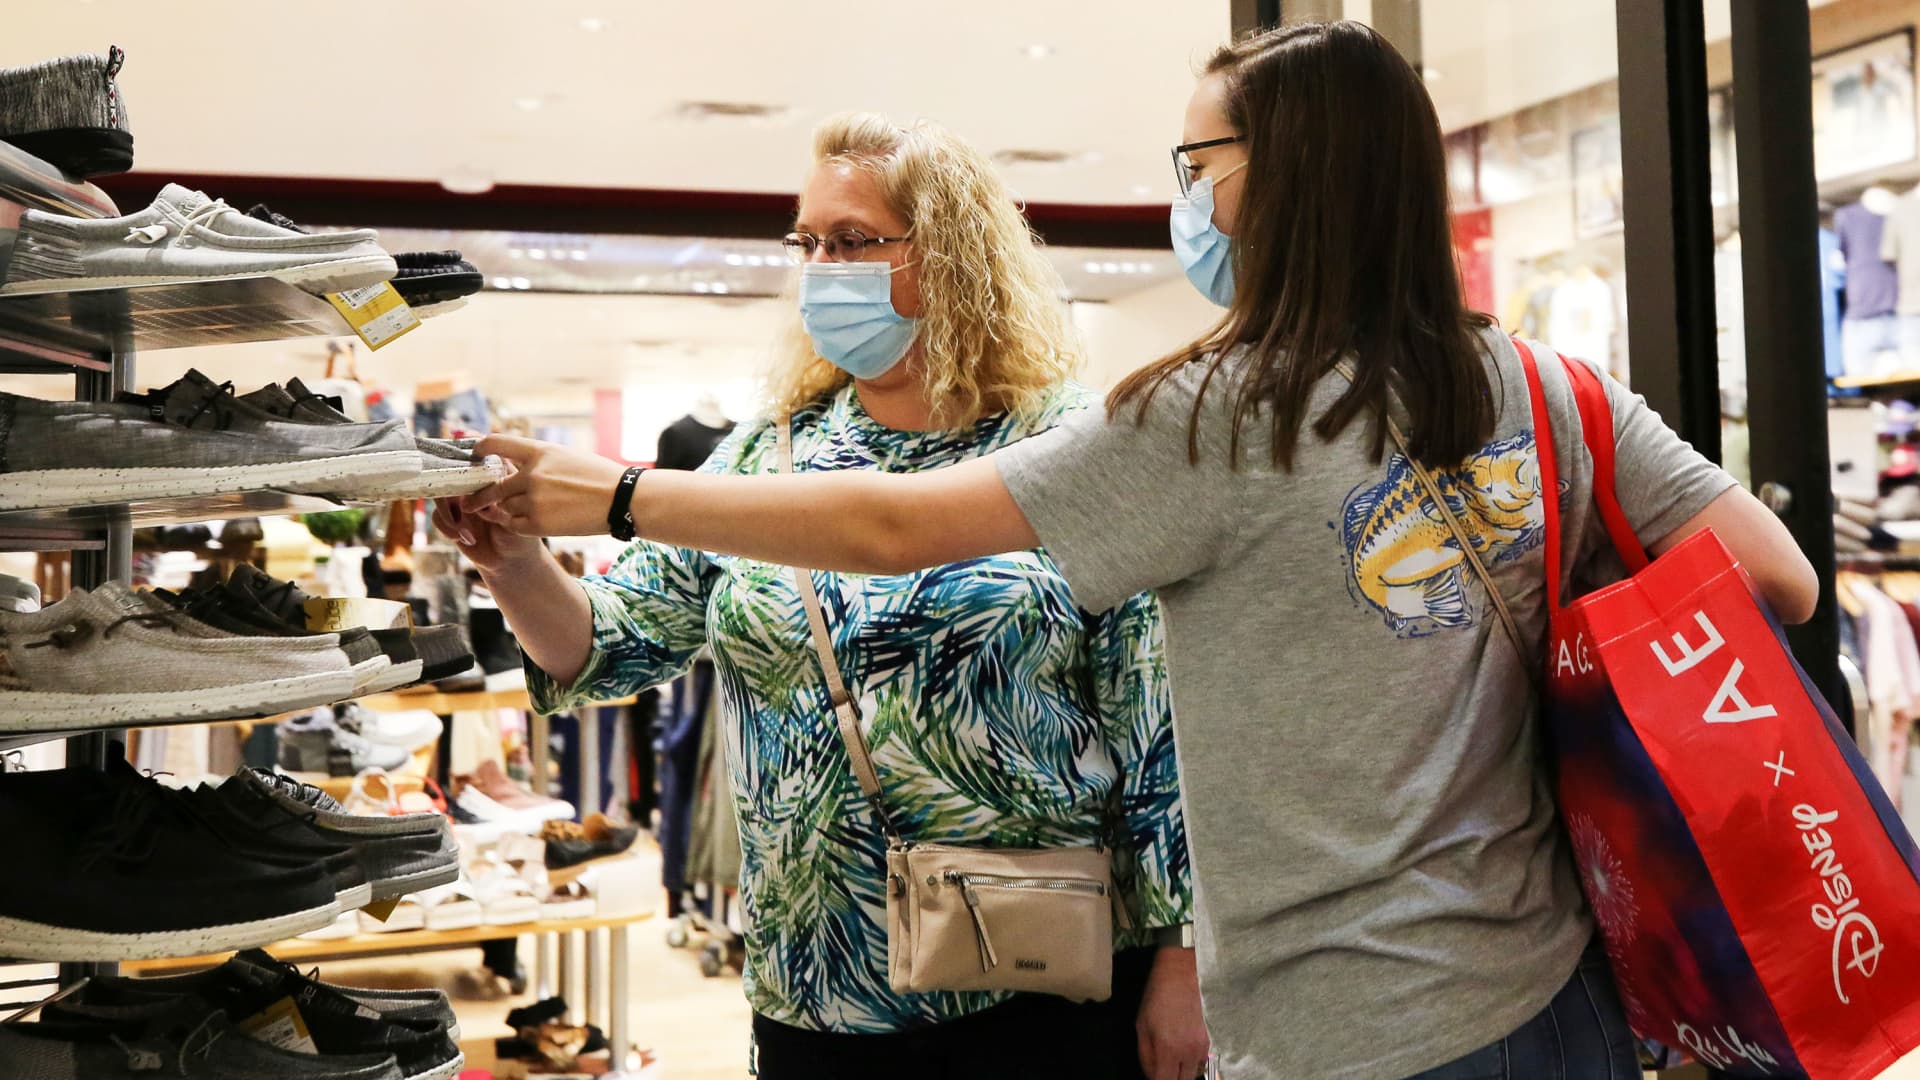 Shoppers look at shoes at Coastal Grand Mall on Black Friday, as the coronavirus disease (COVID-19) pandemic continues, in Myrtle Beach, South Carolina, November 27, 2020.